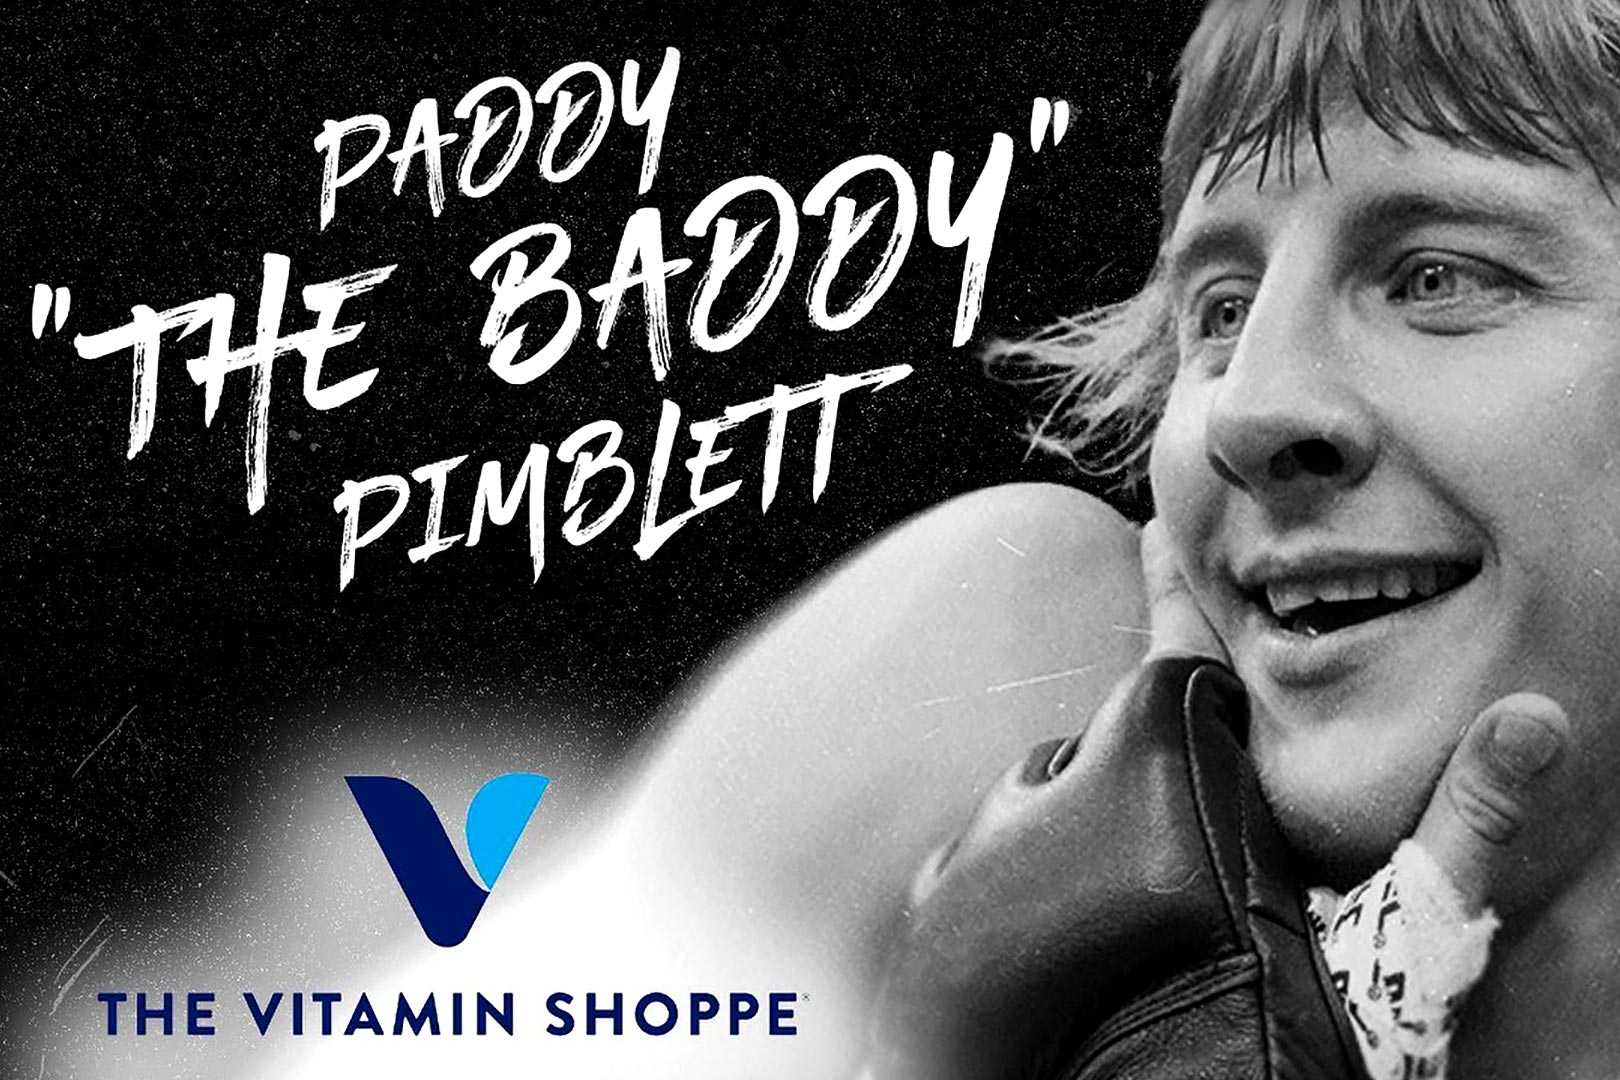 Applied Brings Paddy Pimblett To Vitamin Shoppe